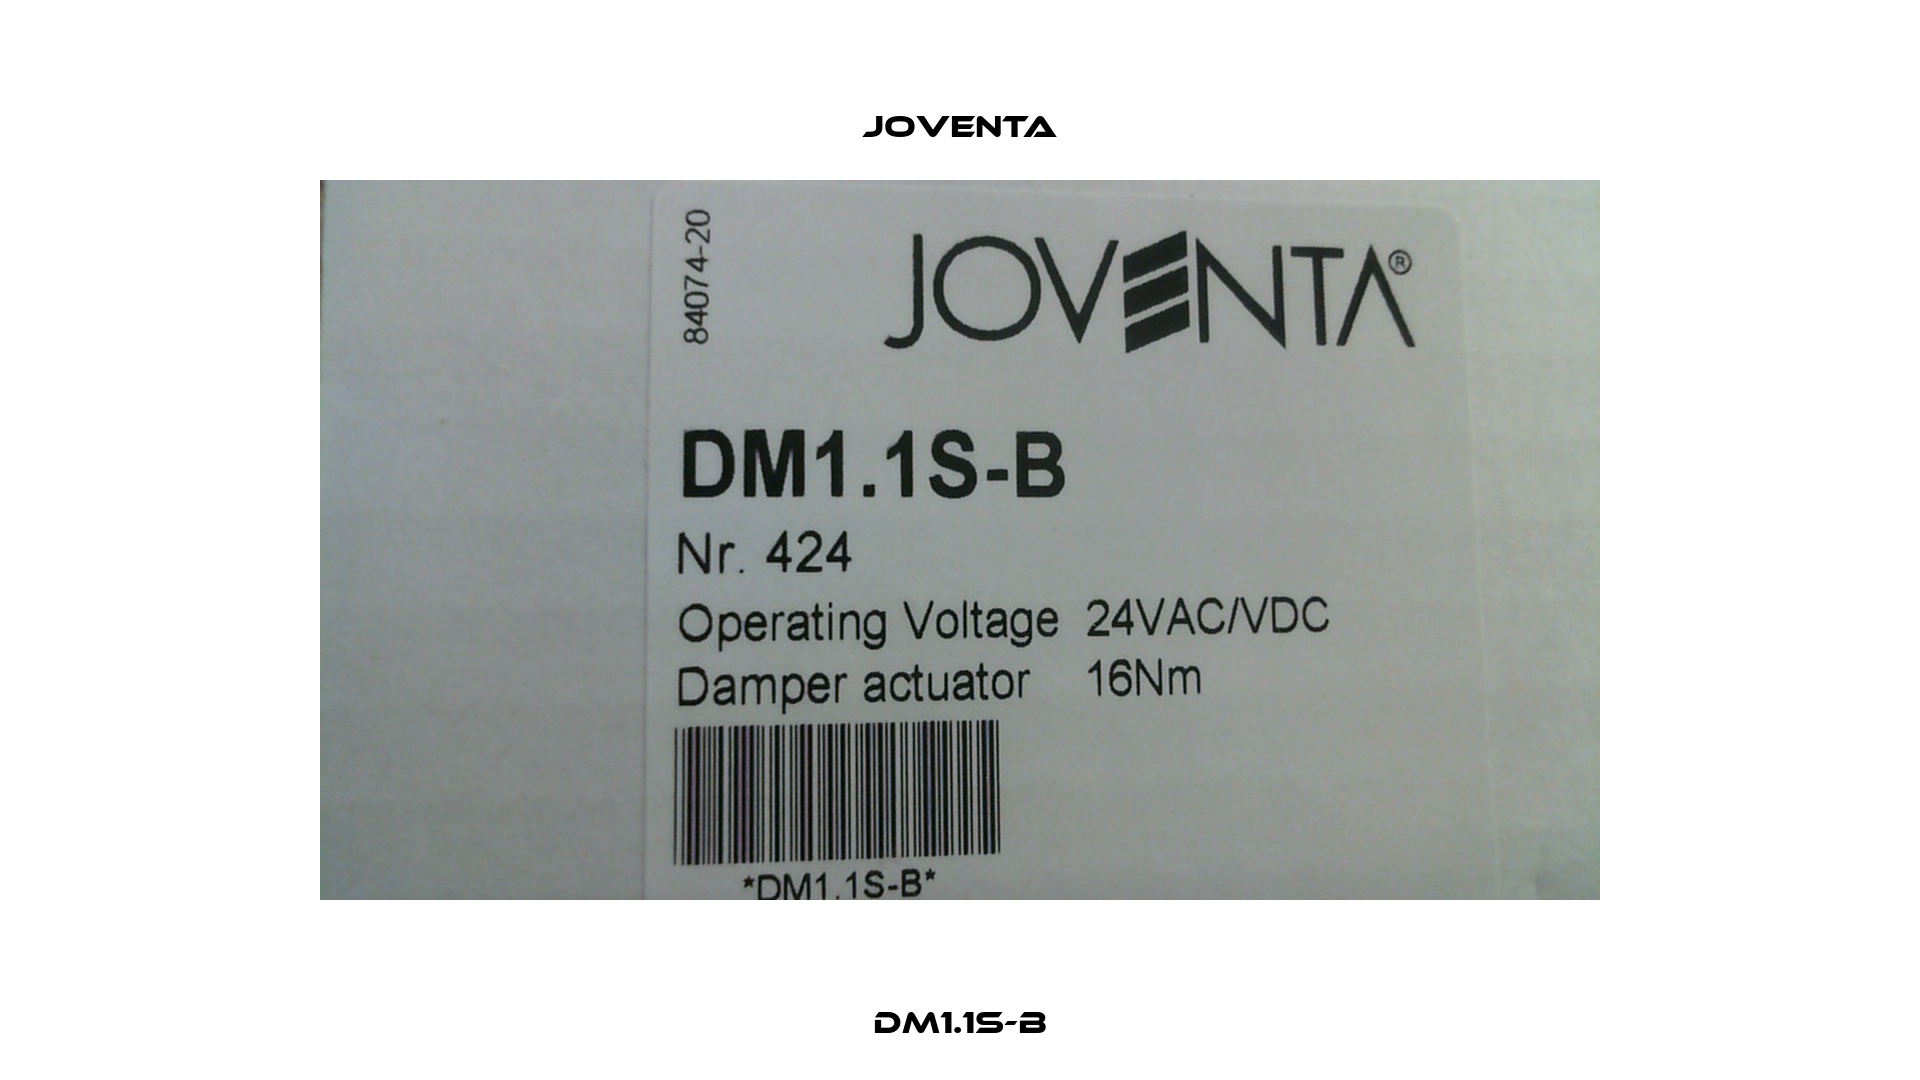 DM1.1S-B Joventa